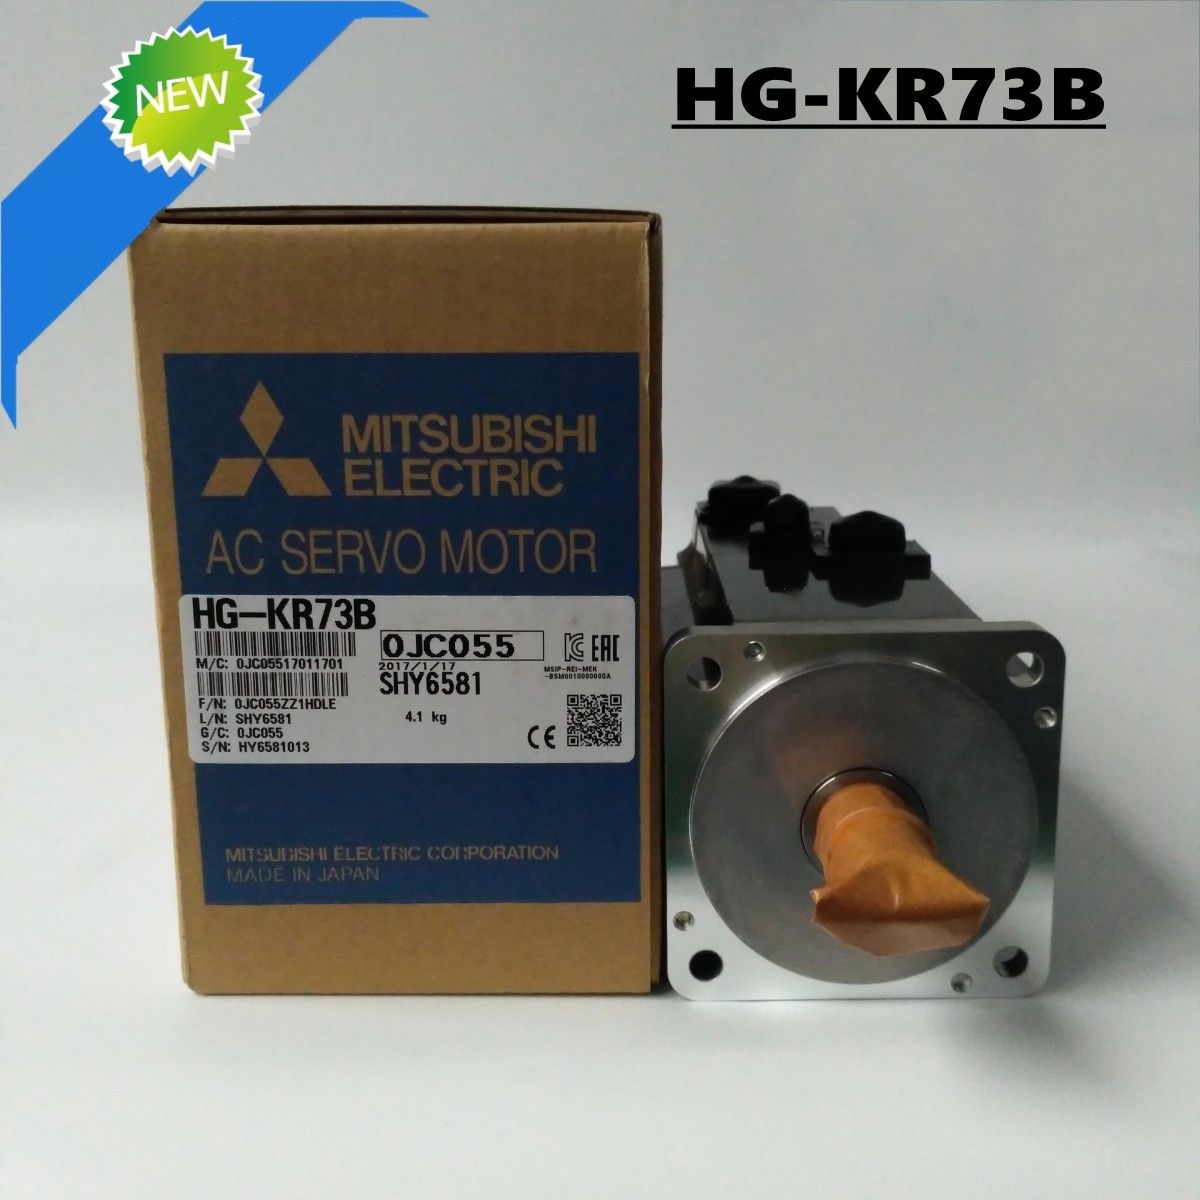 Brand New Mitsubishi Servo Motor HG-KR73 HG-KR73J HG-KR73B HG-KR73BJ IN BOX - Click Image to Close